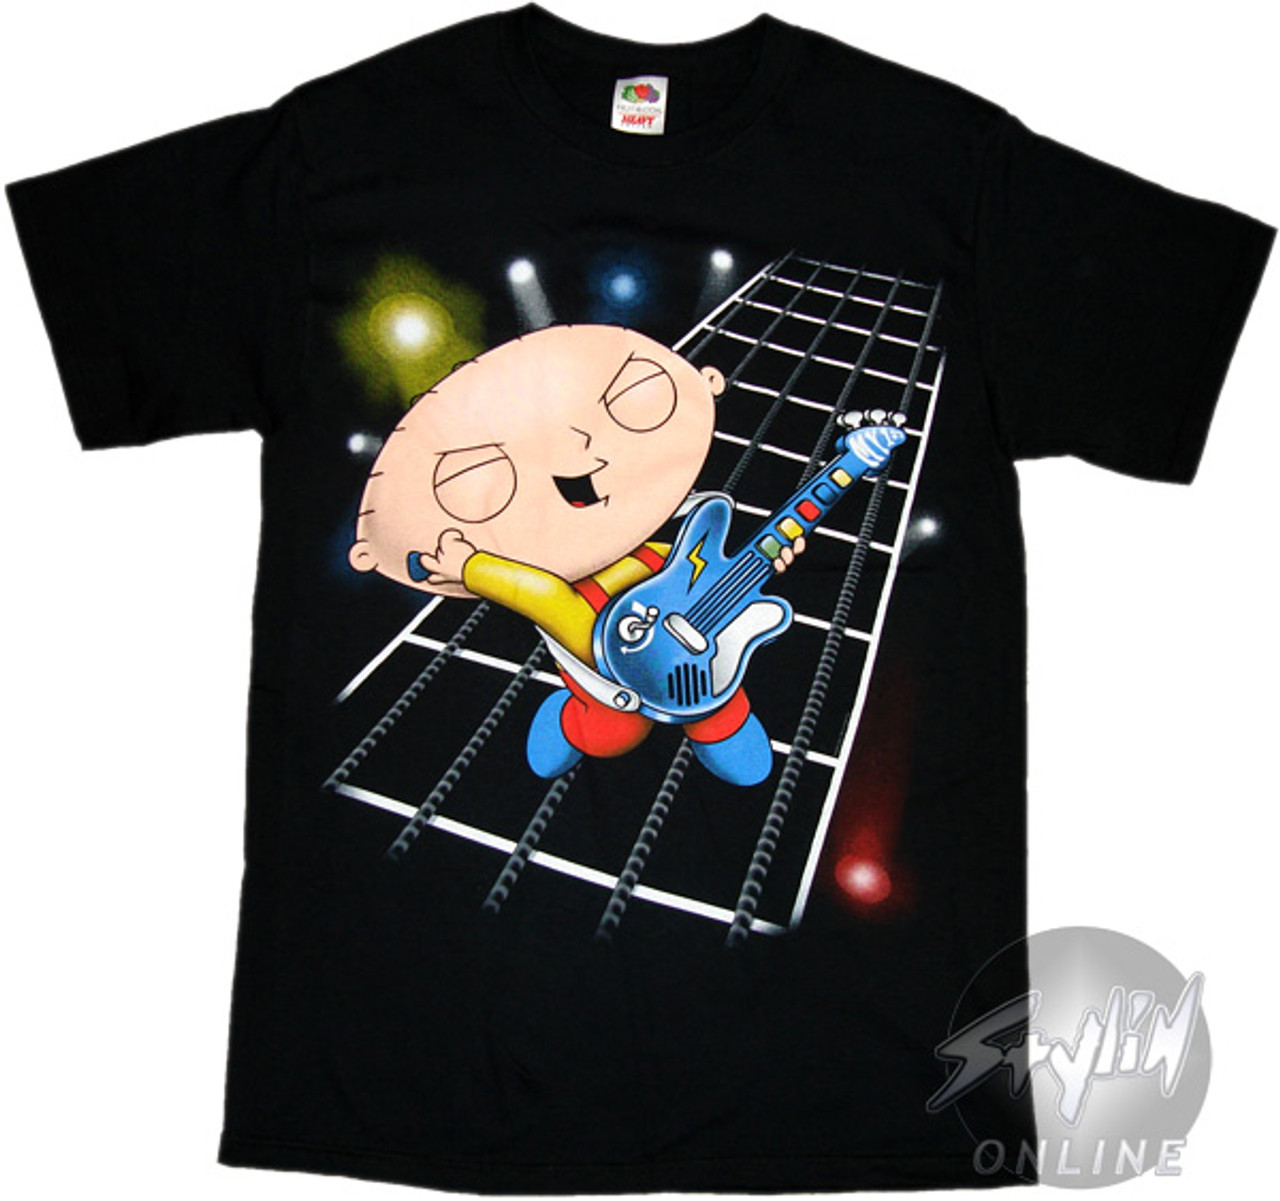 family guy stewie hero t shirt 3 11148.1 - Family Guy Shop